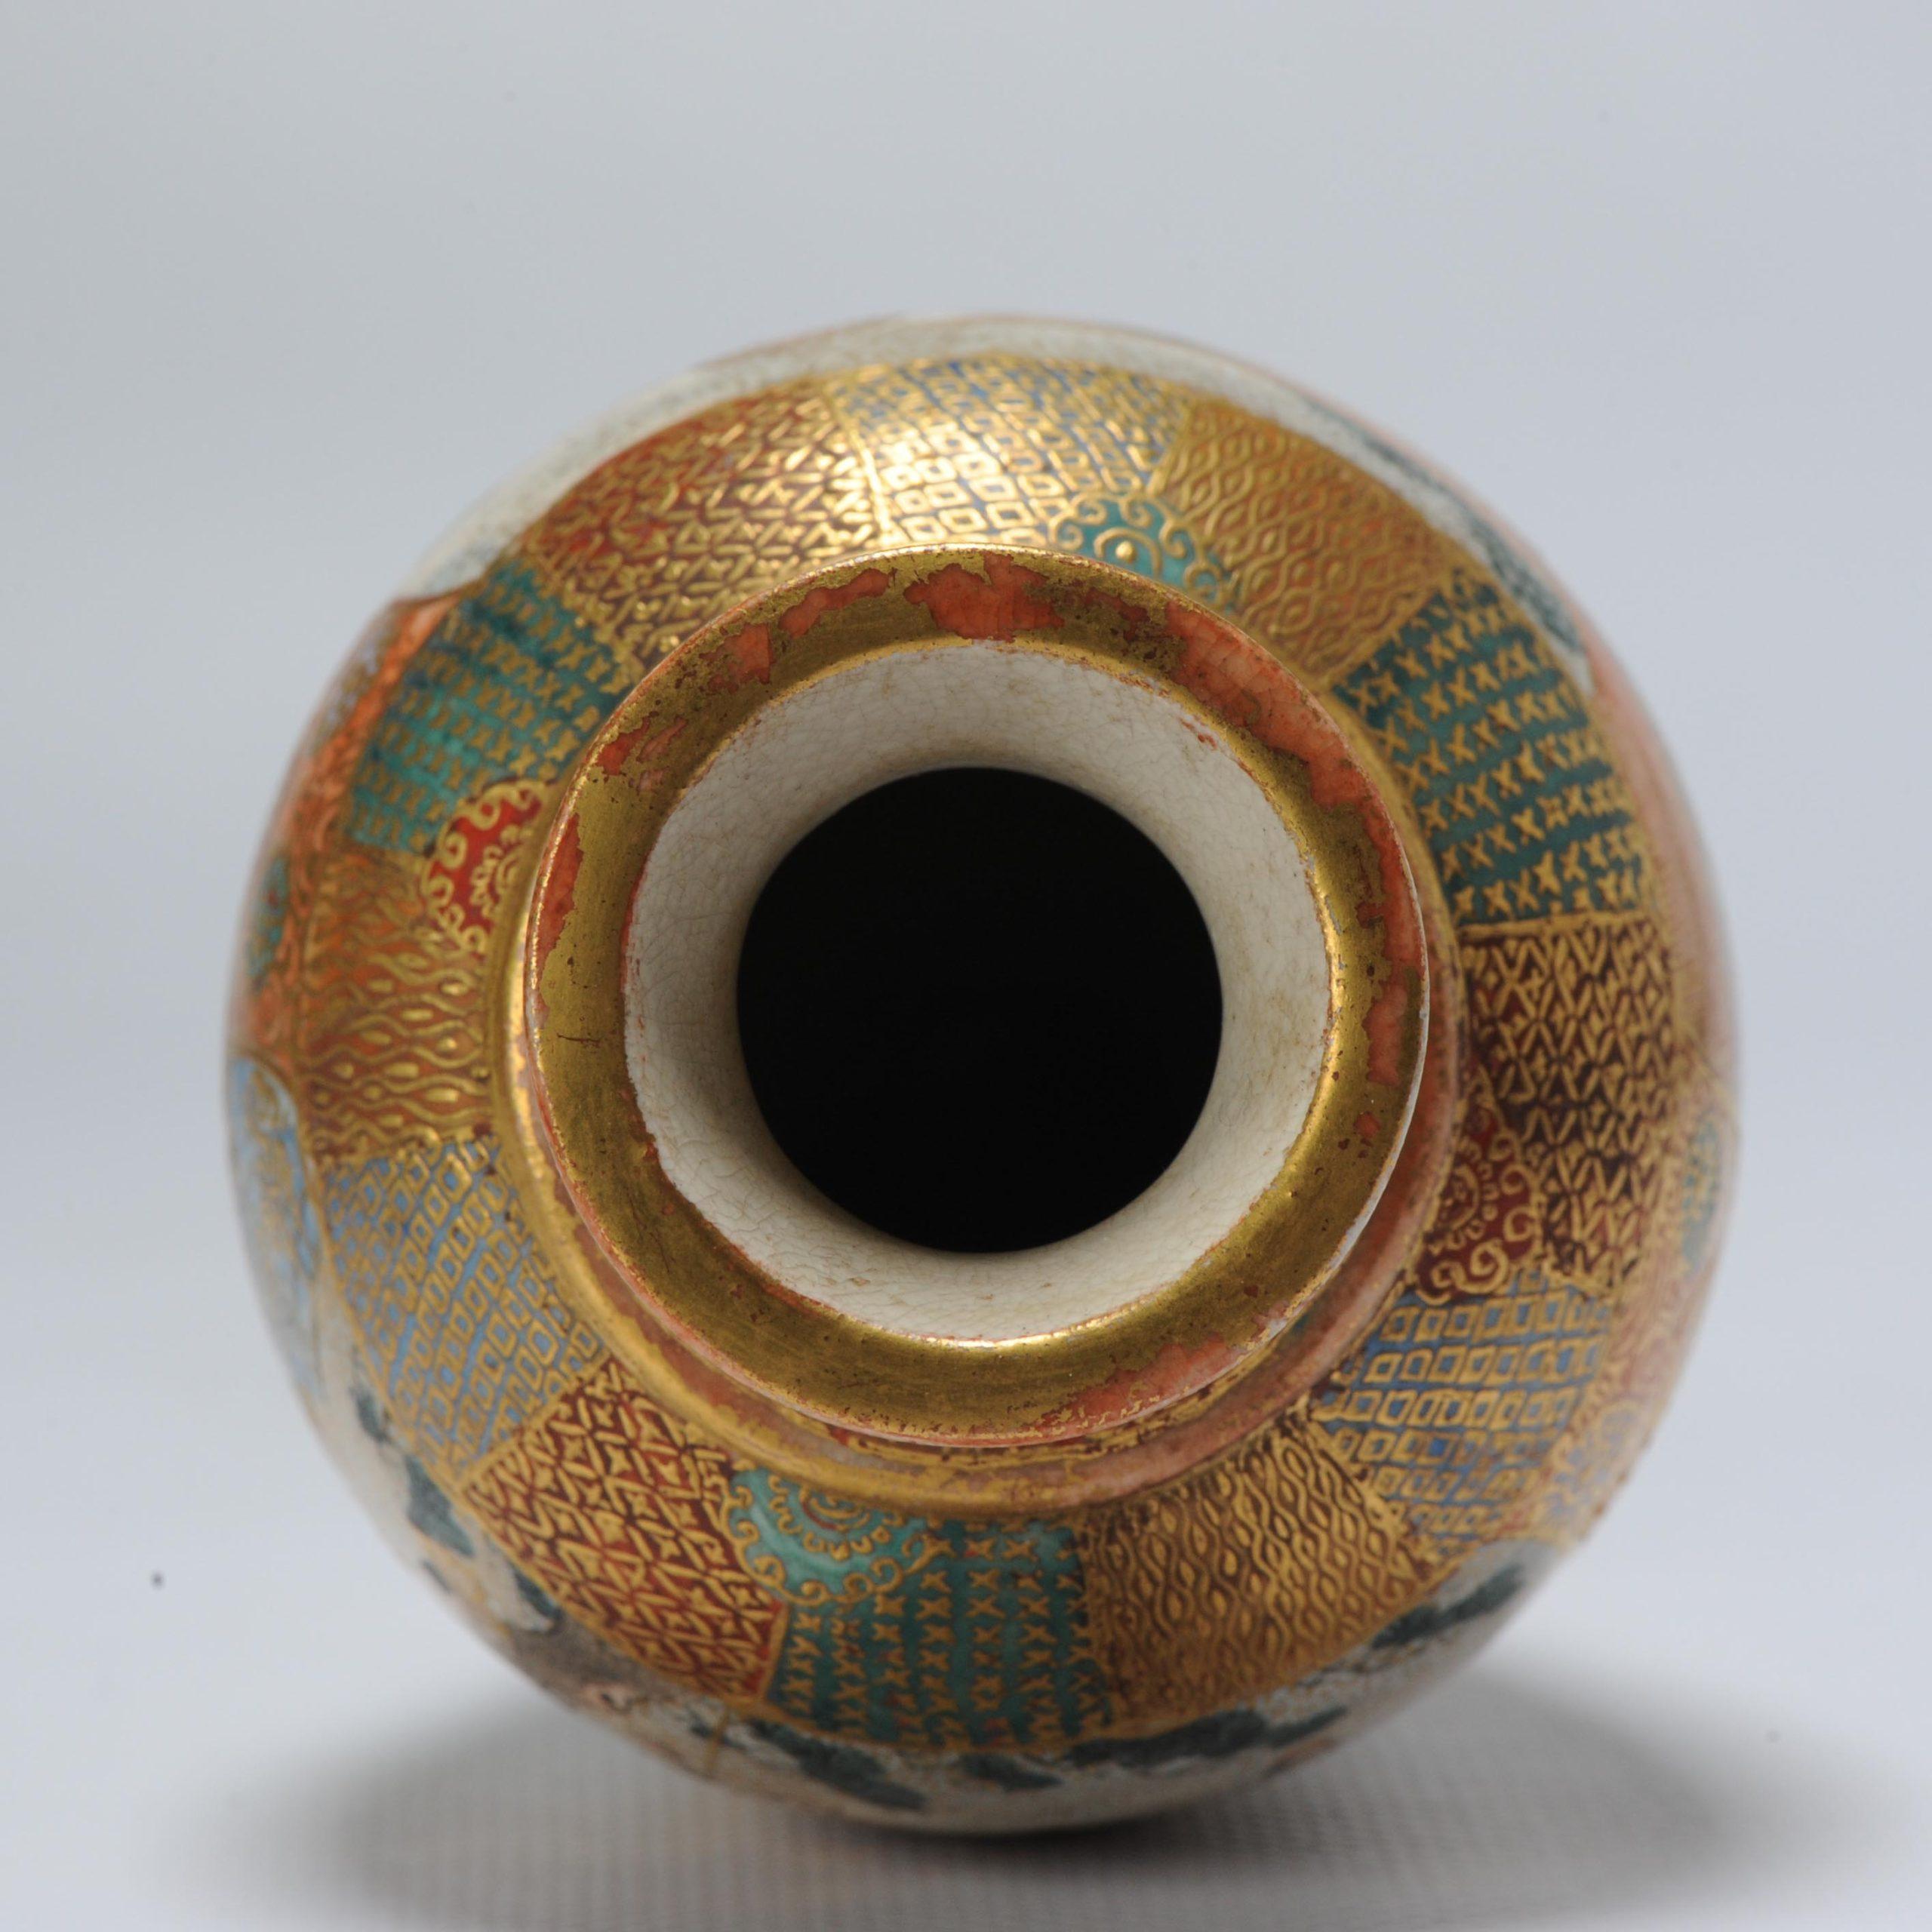 Japanese Antique Satsuma Vase Signed Meiji Era 1868-1912, Late 19th/Early 20th Century For Sale